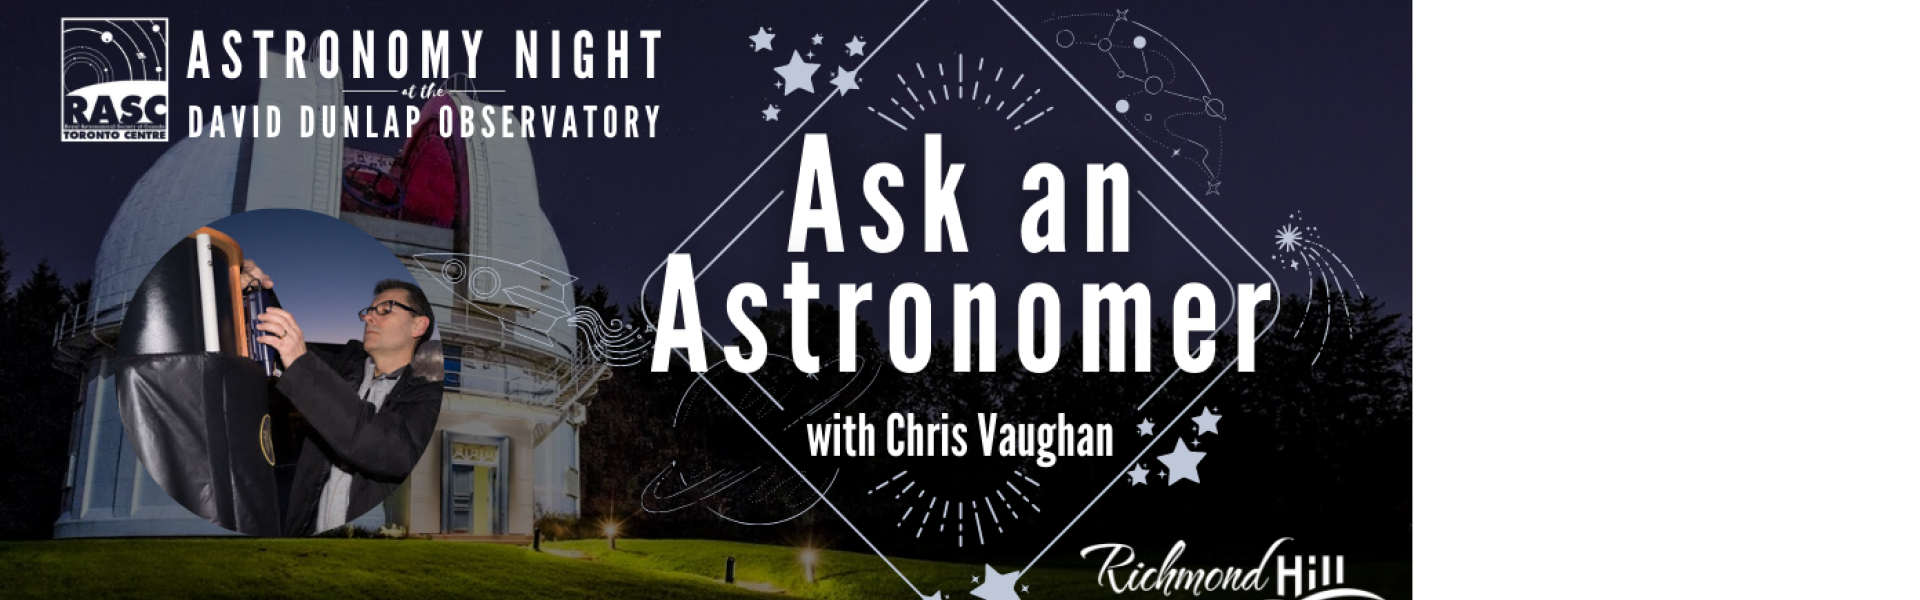 DDO - Ask an Astronomer